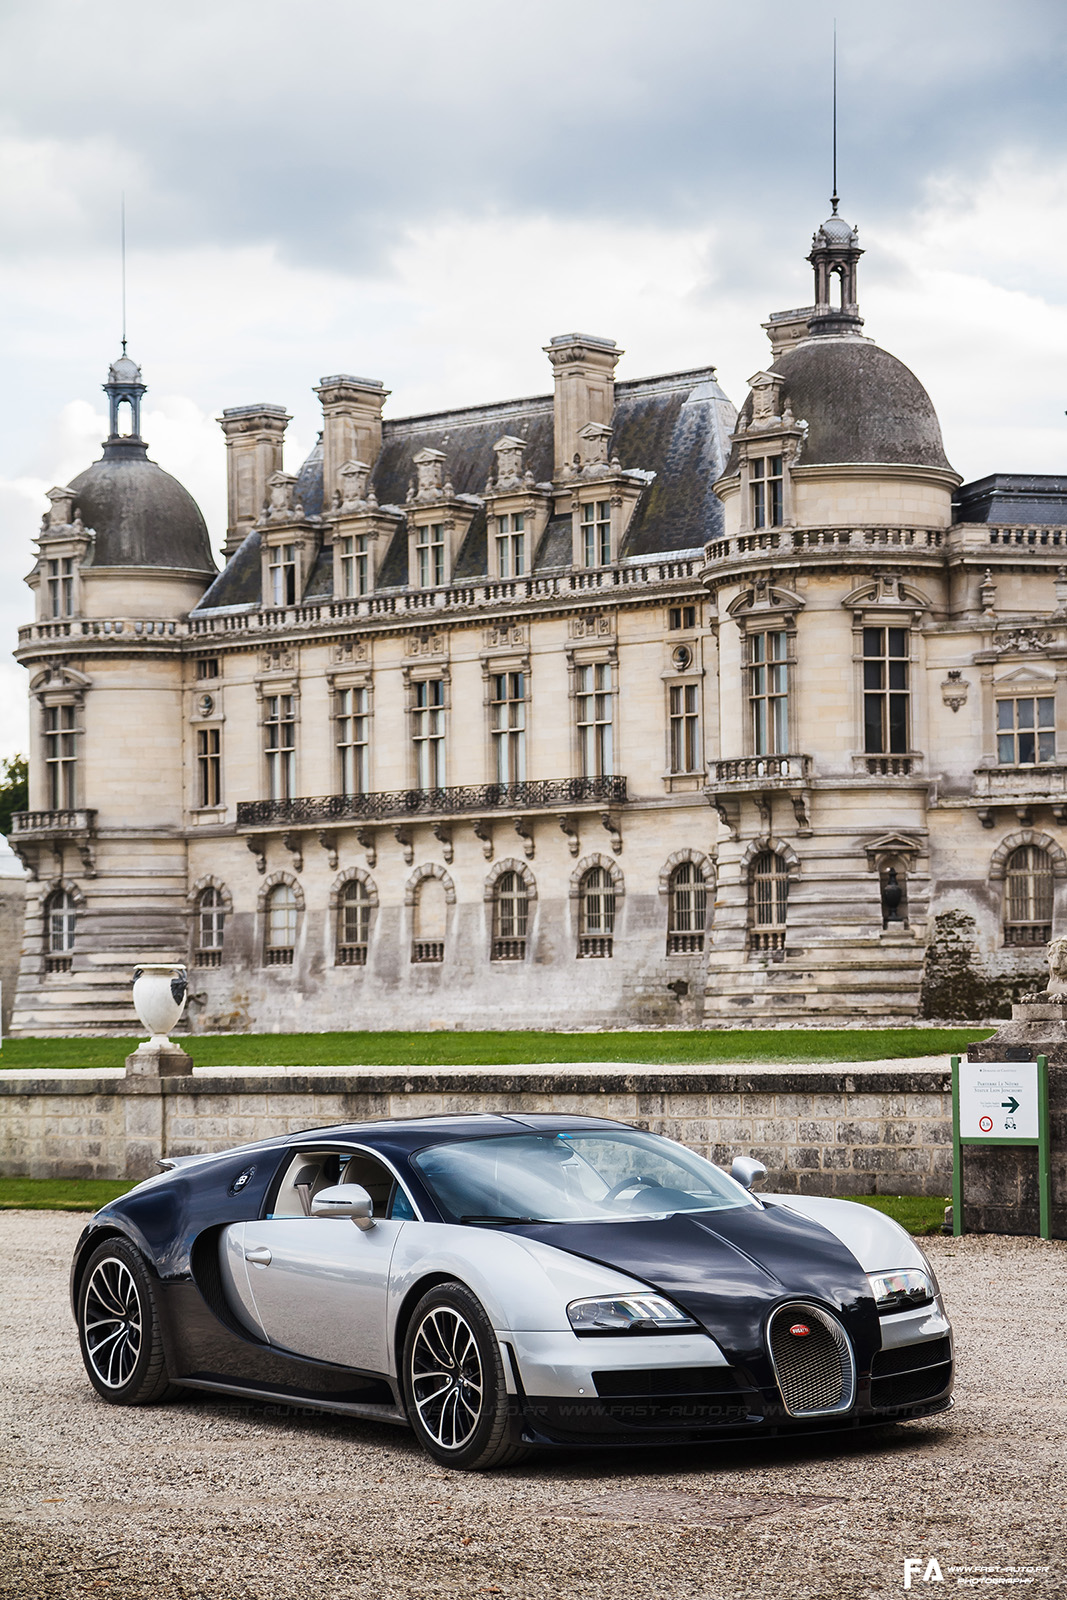 12-shooting-bugatti-veyron-photo-chantilly-concours.jpg